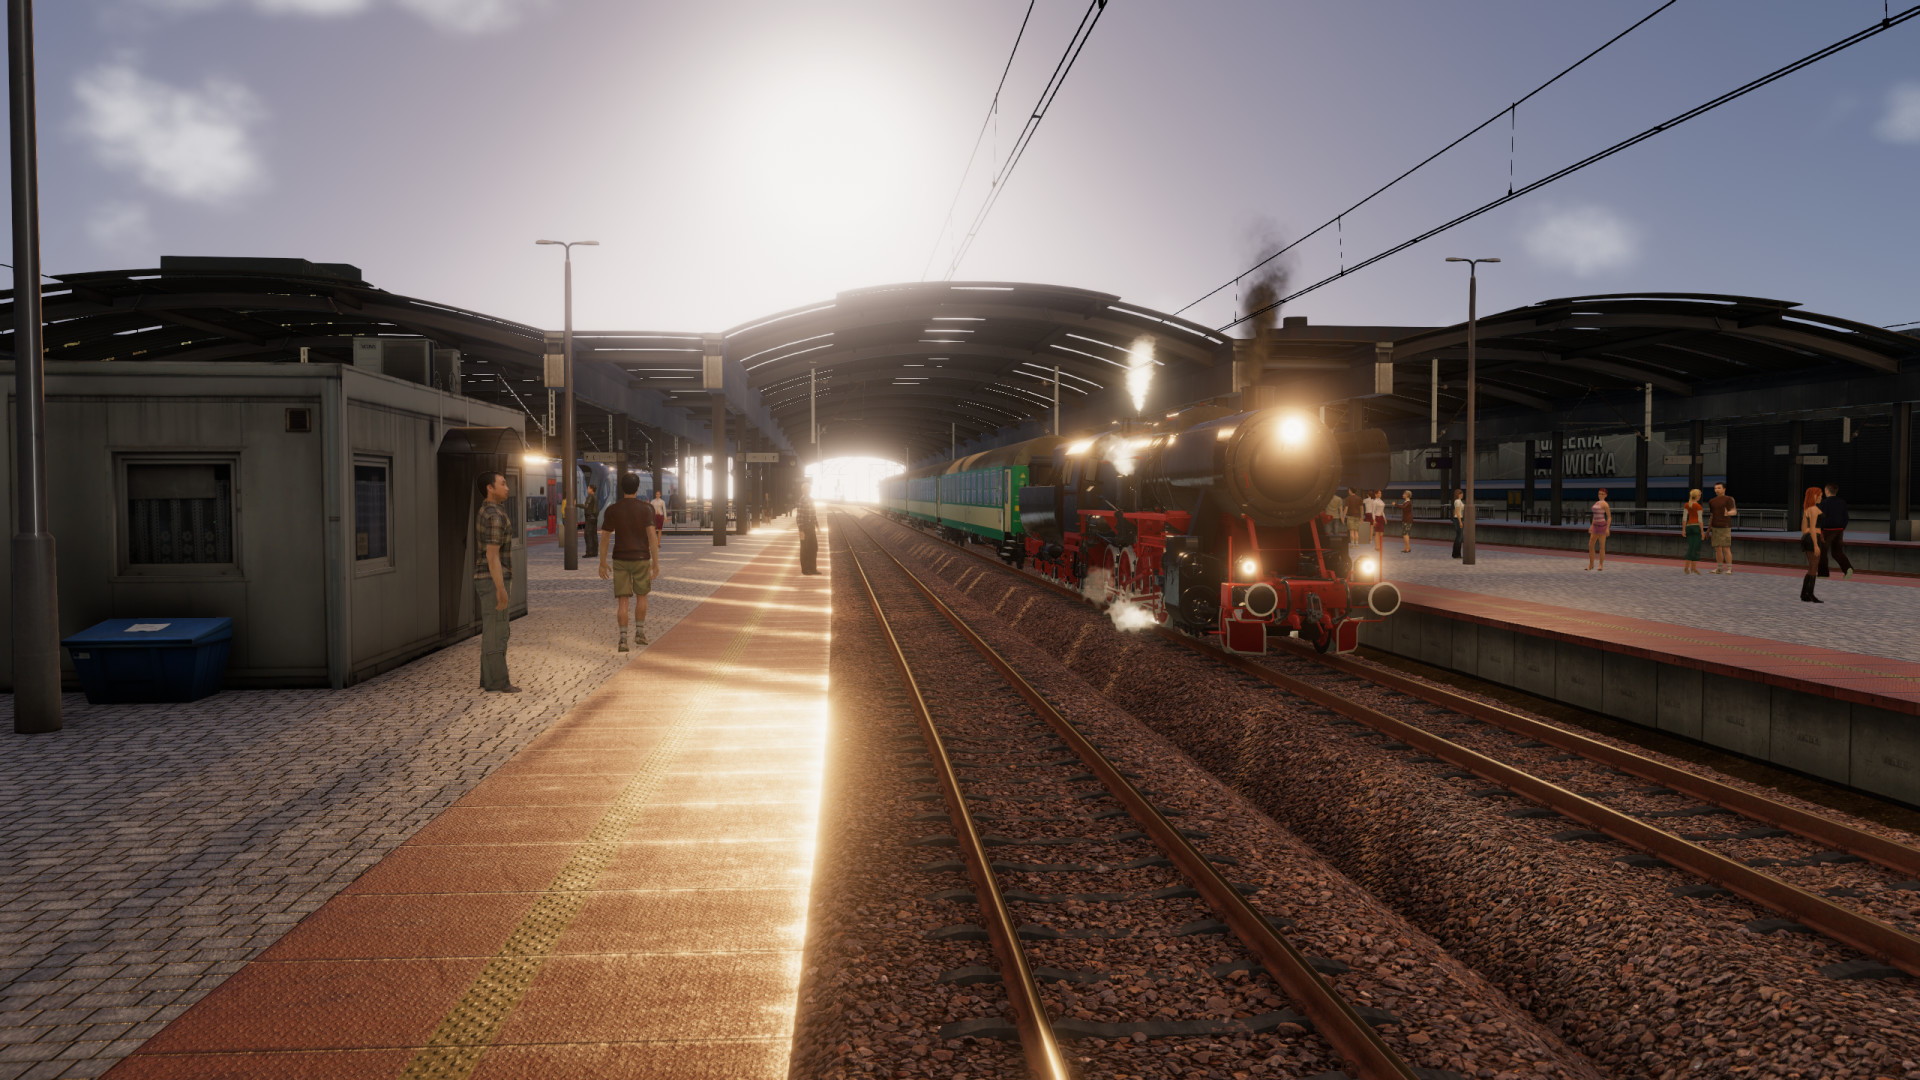 SimRail - The Railway Simulator - screenshot 6